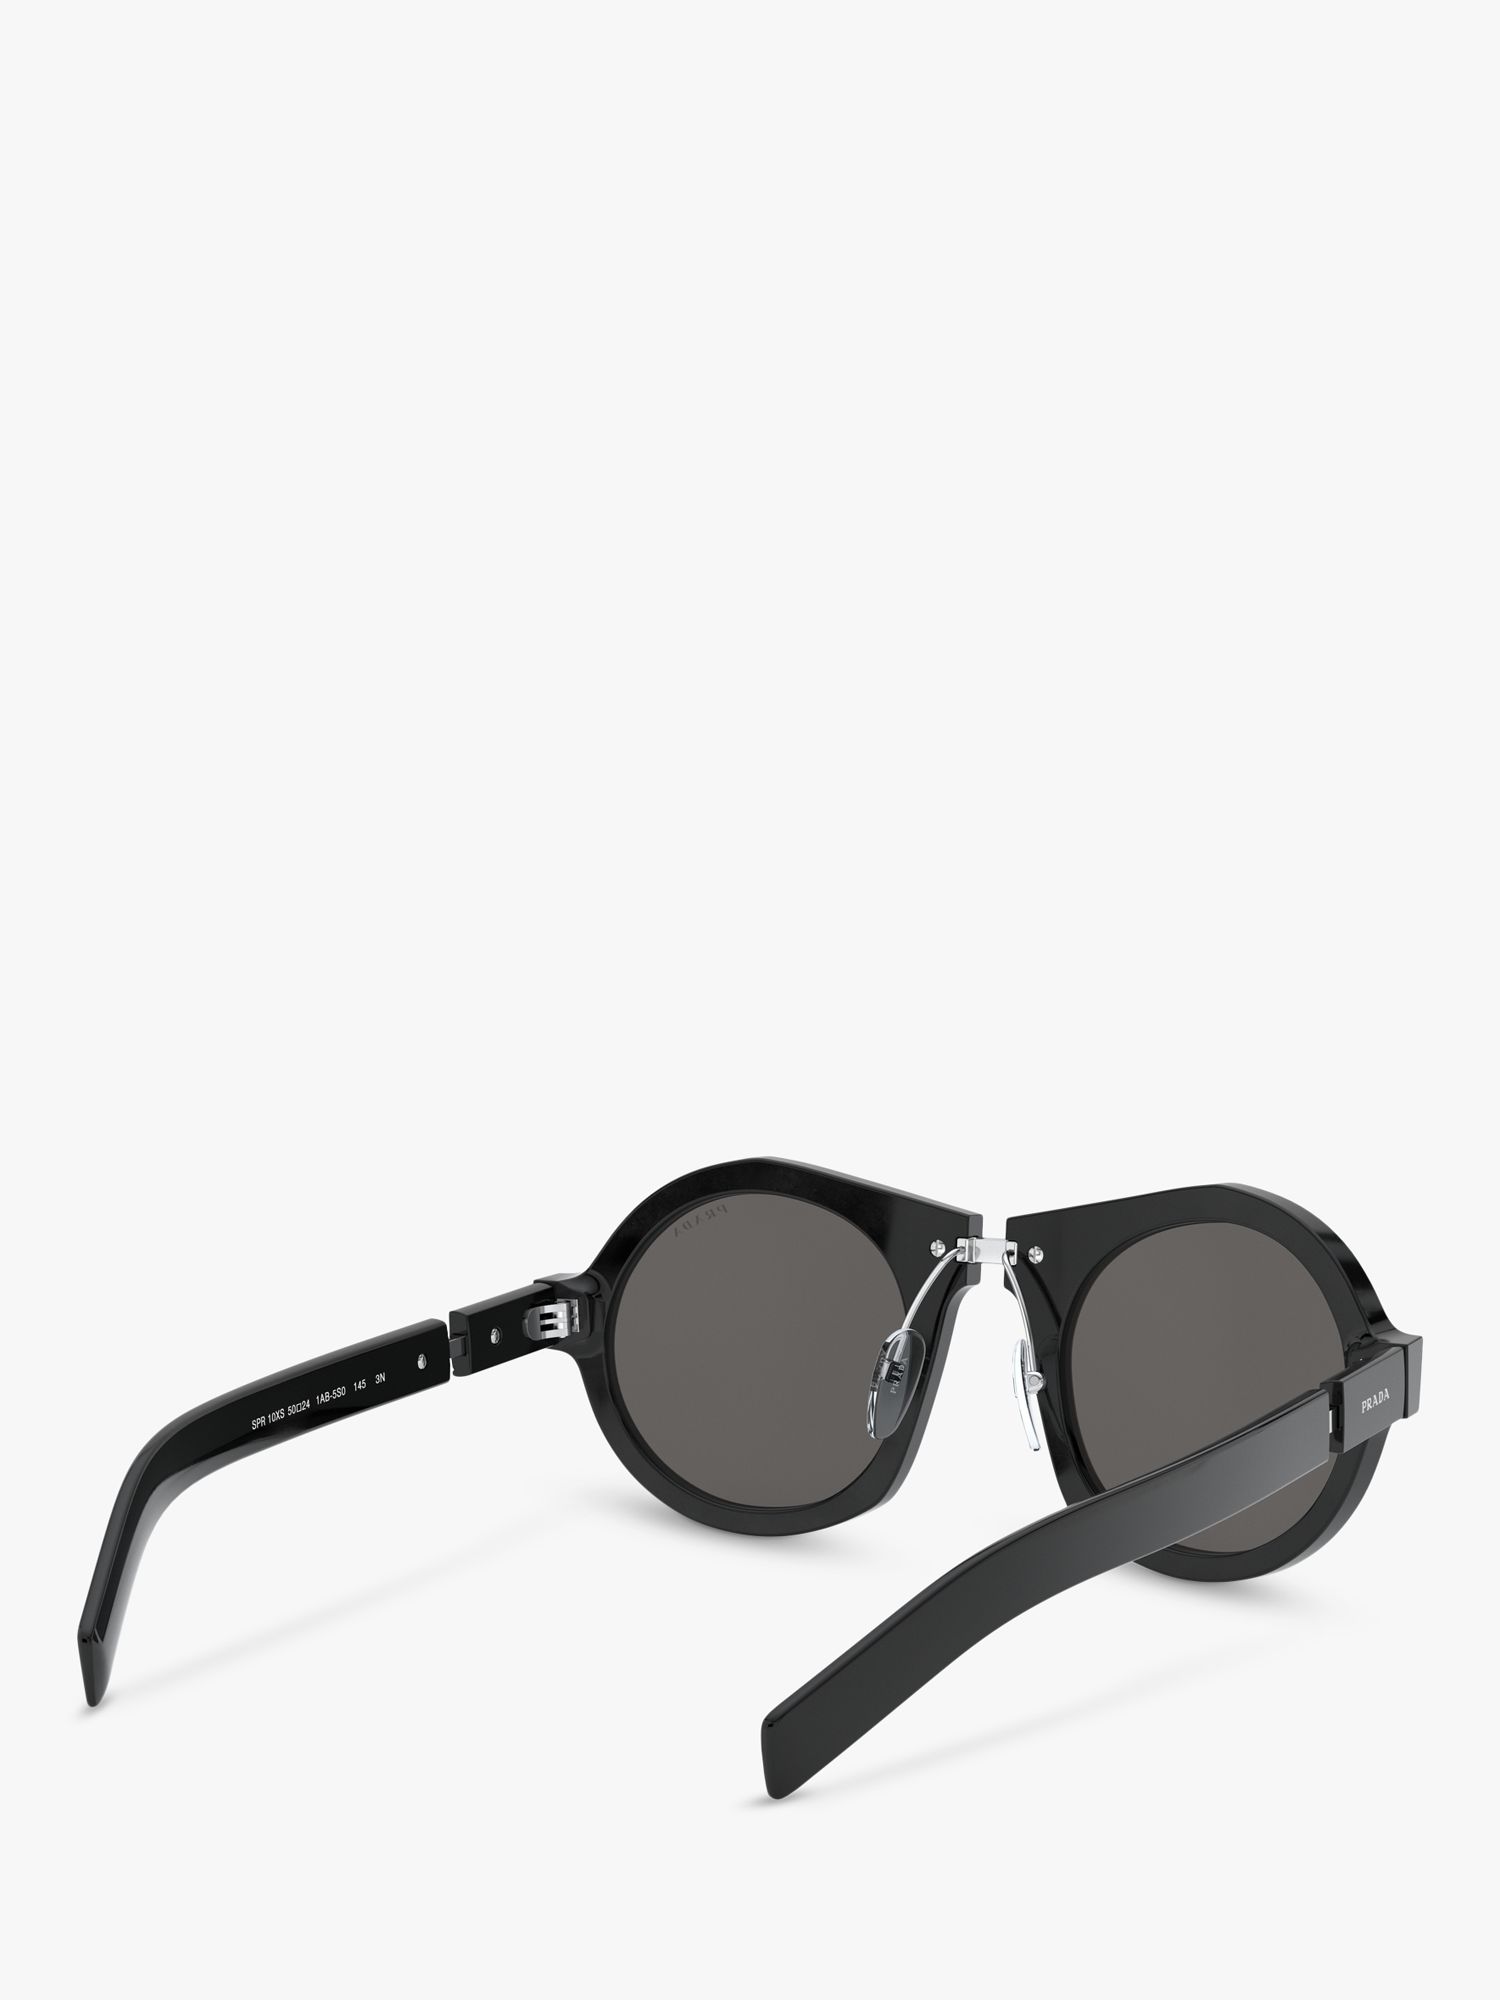 PRADA PR 10XS Women's Round Sunglasses, Black at John Lewis & Partners